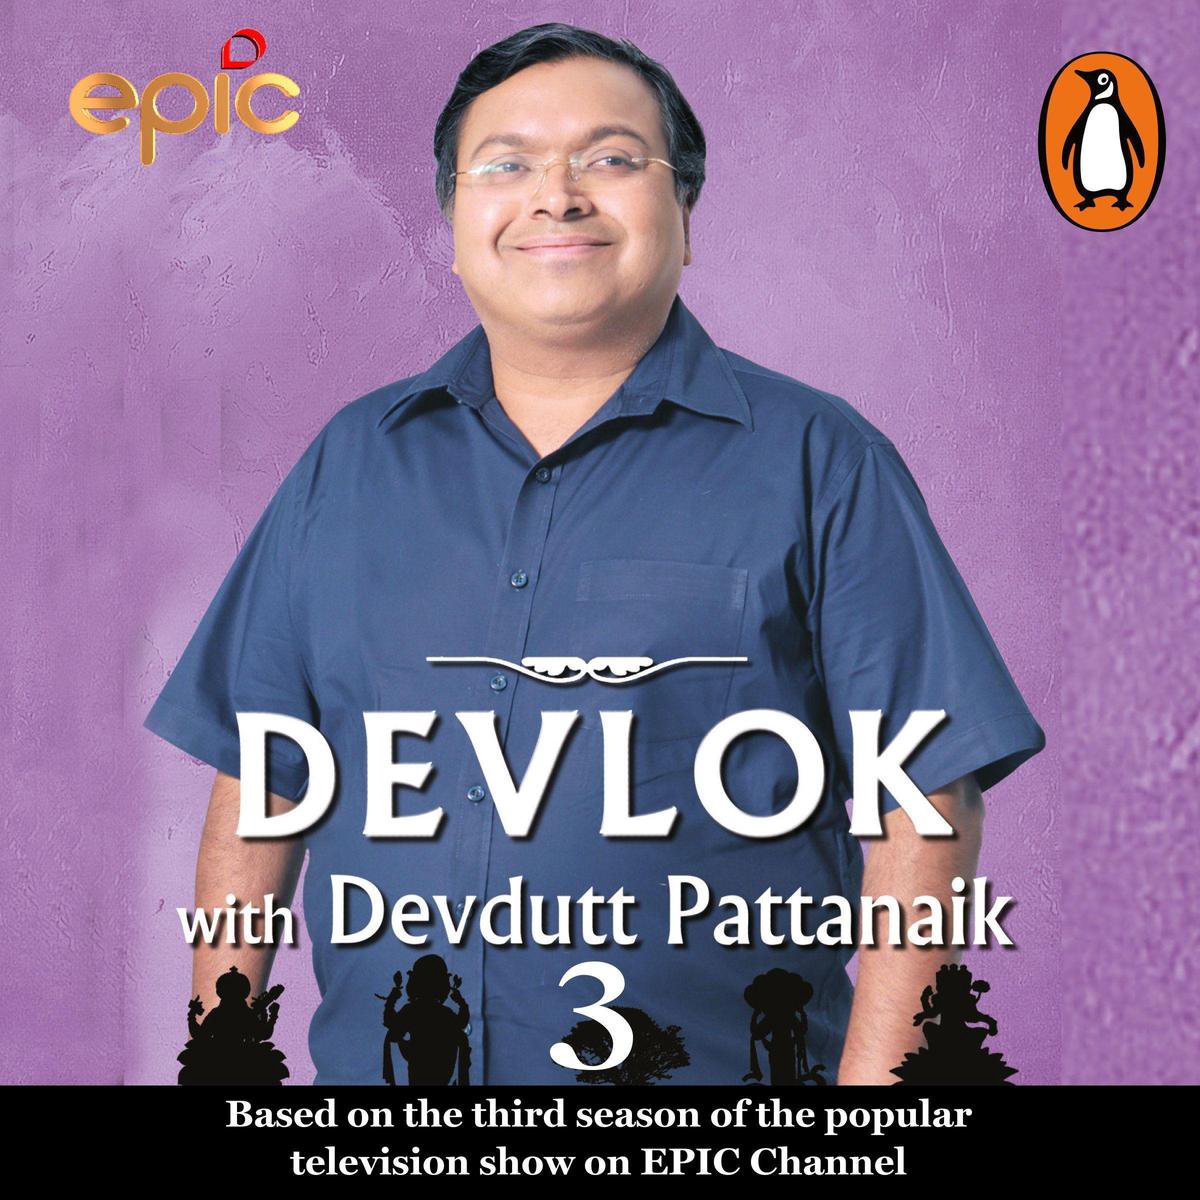 Devlok 3 - Devdutt Pattanaik